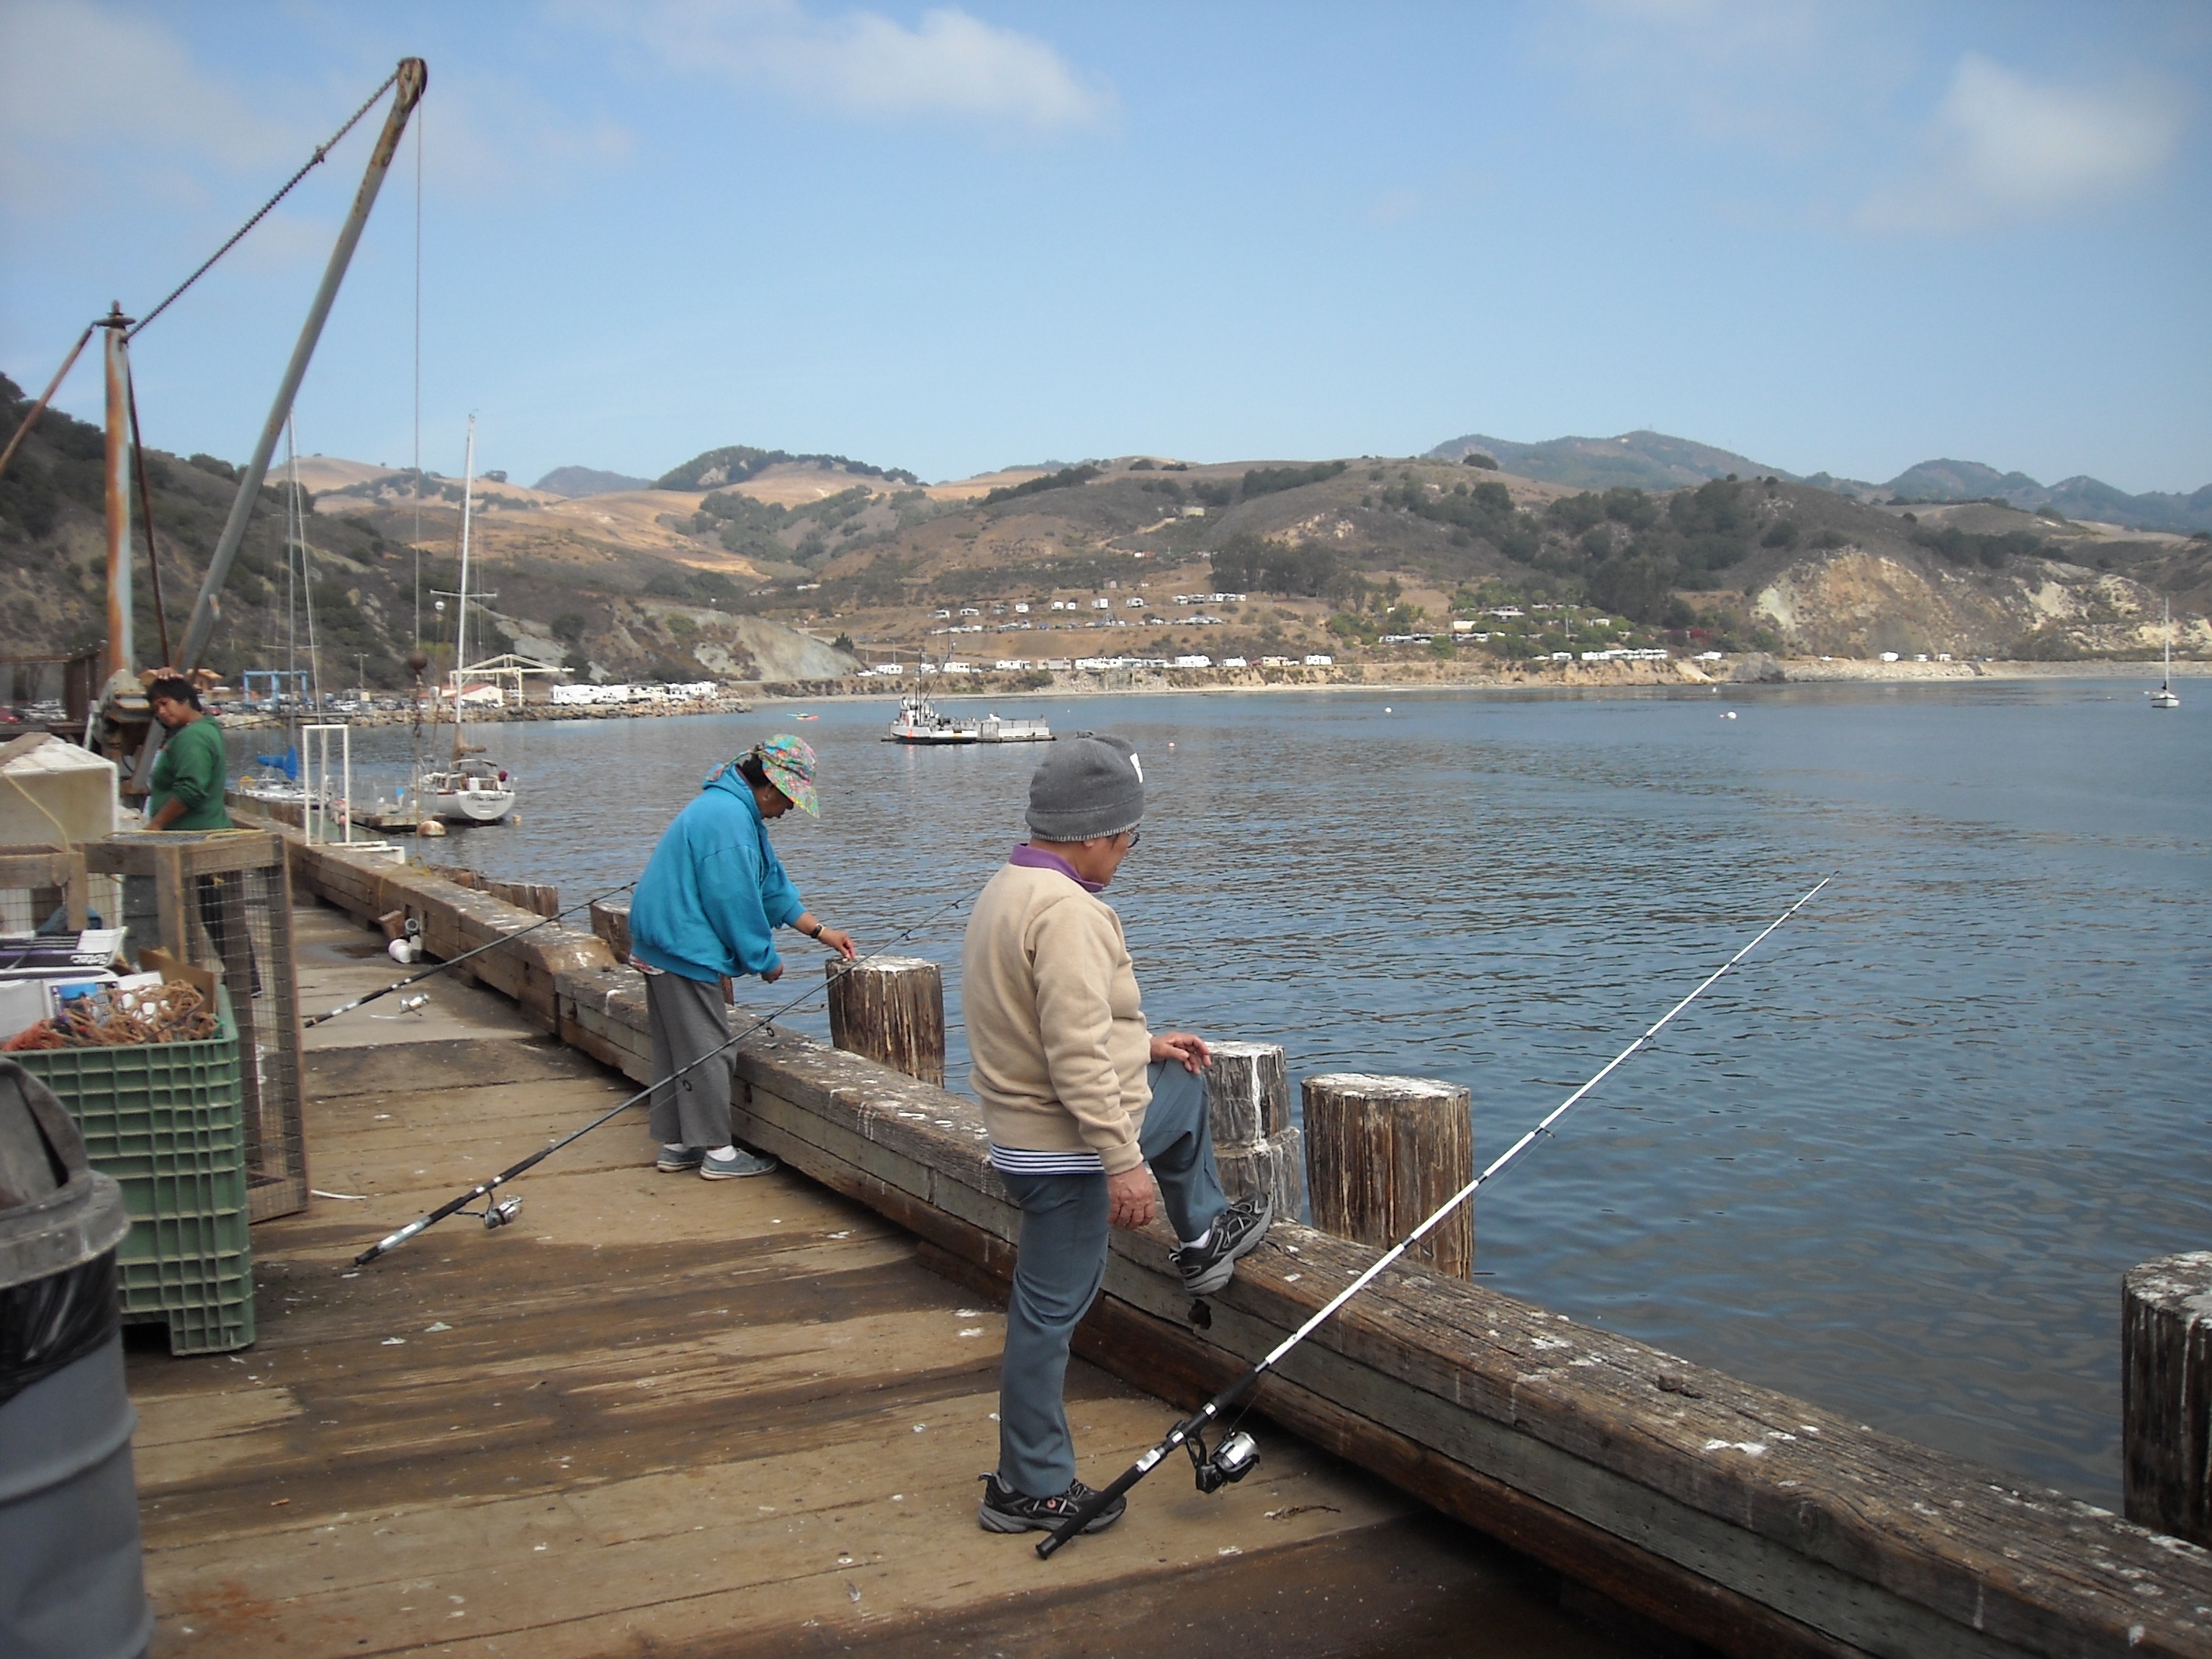 Port San Luis Pier (Harford Pier) — Avila Beach - Pier Fishing in California